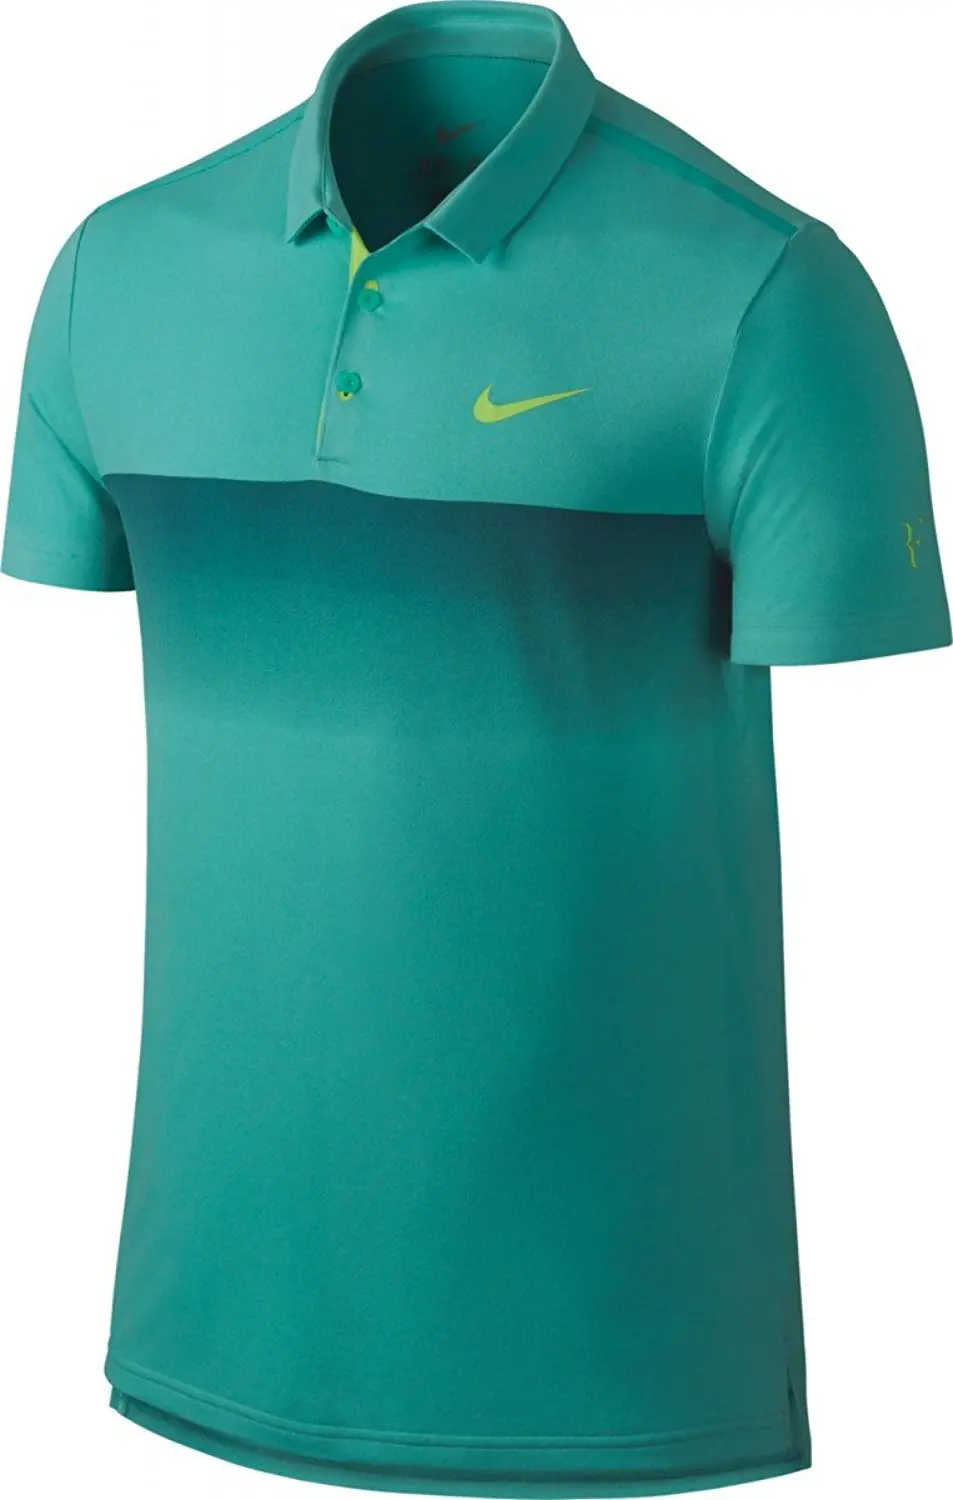 Buy NIKE Premier RF Mens Tennis Polo Shirt in Cheap Price on Alibaba.com